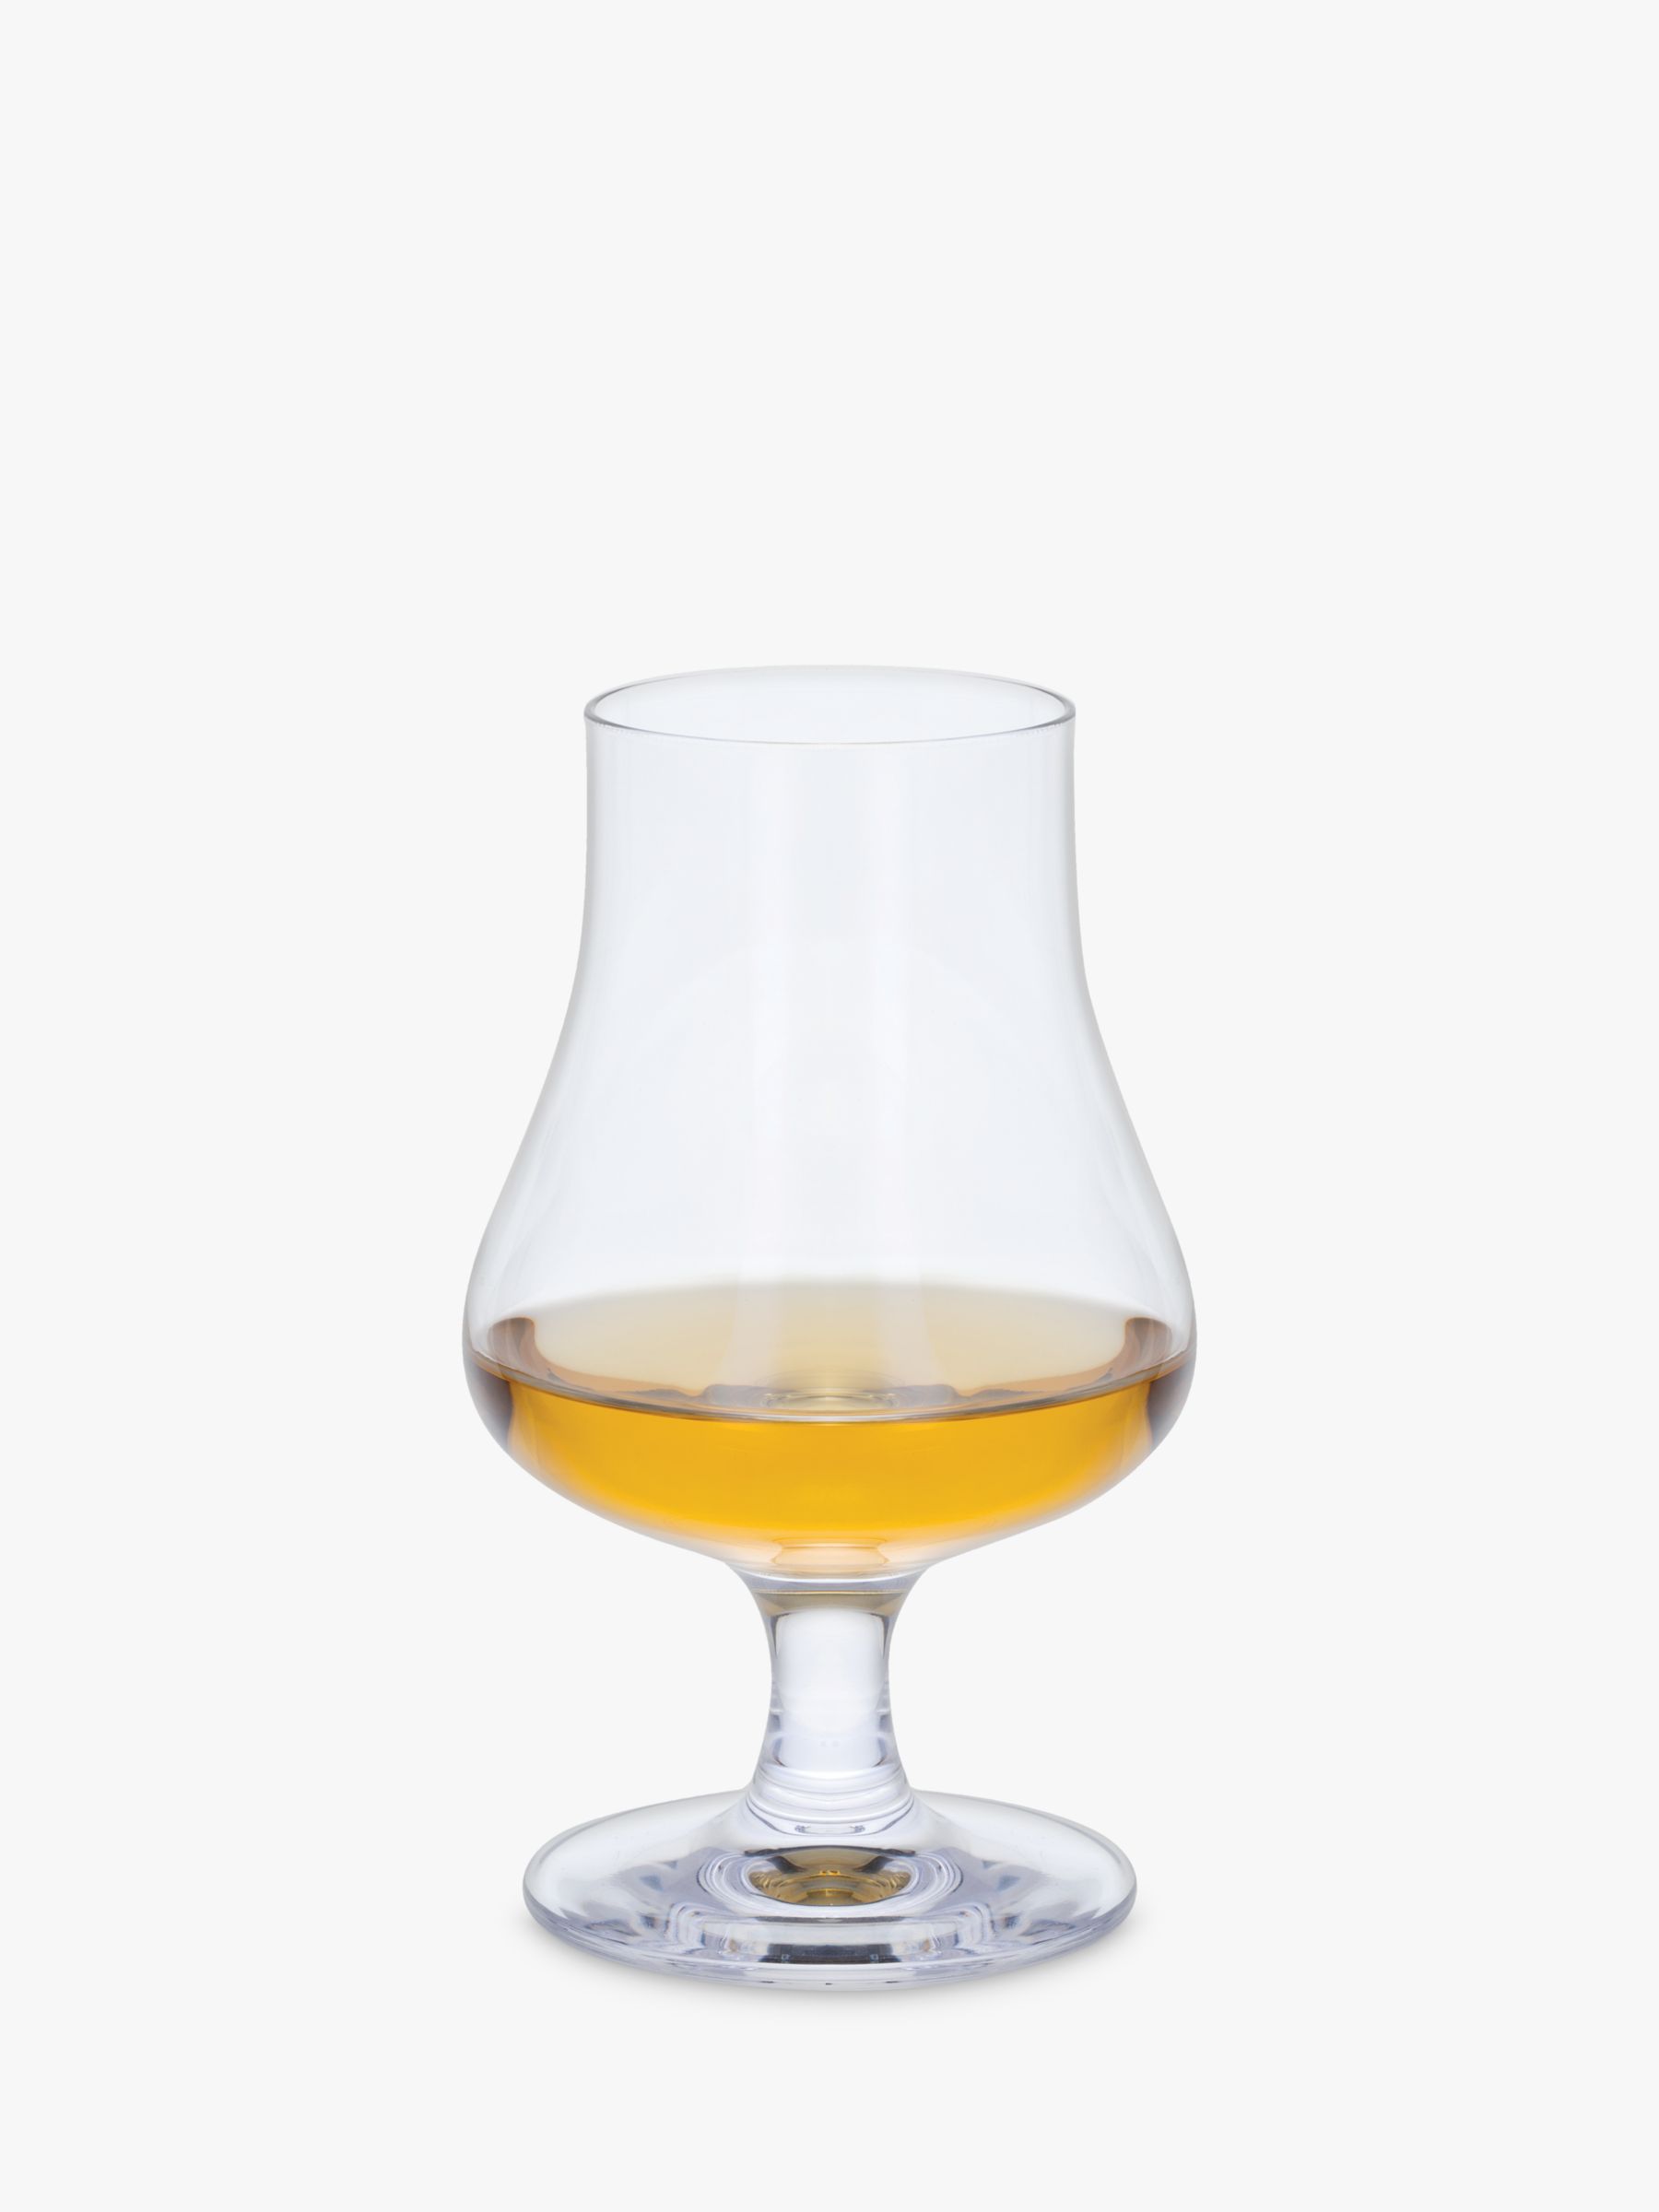 Dartington Crystal Tasting & Nosing Whisky Glass, 195ml, Clear